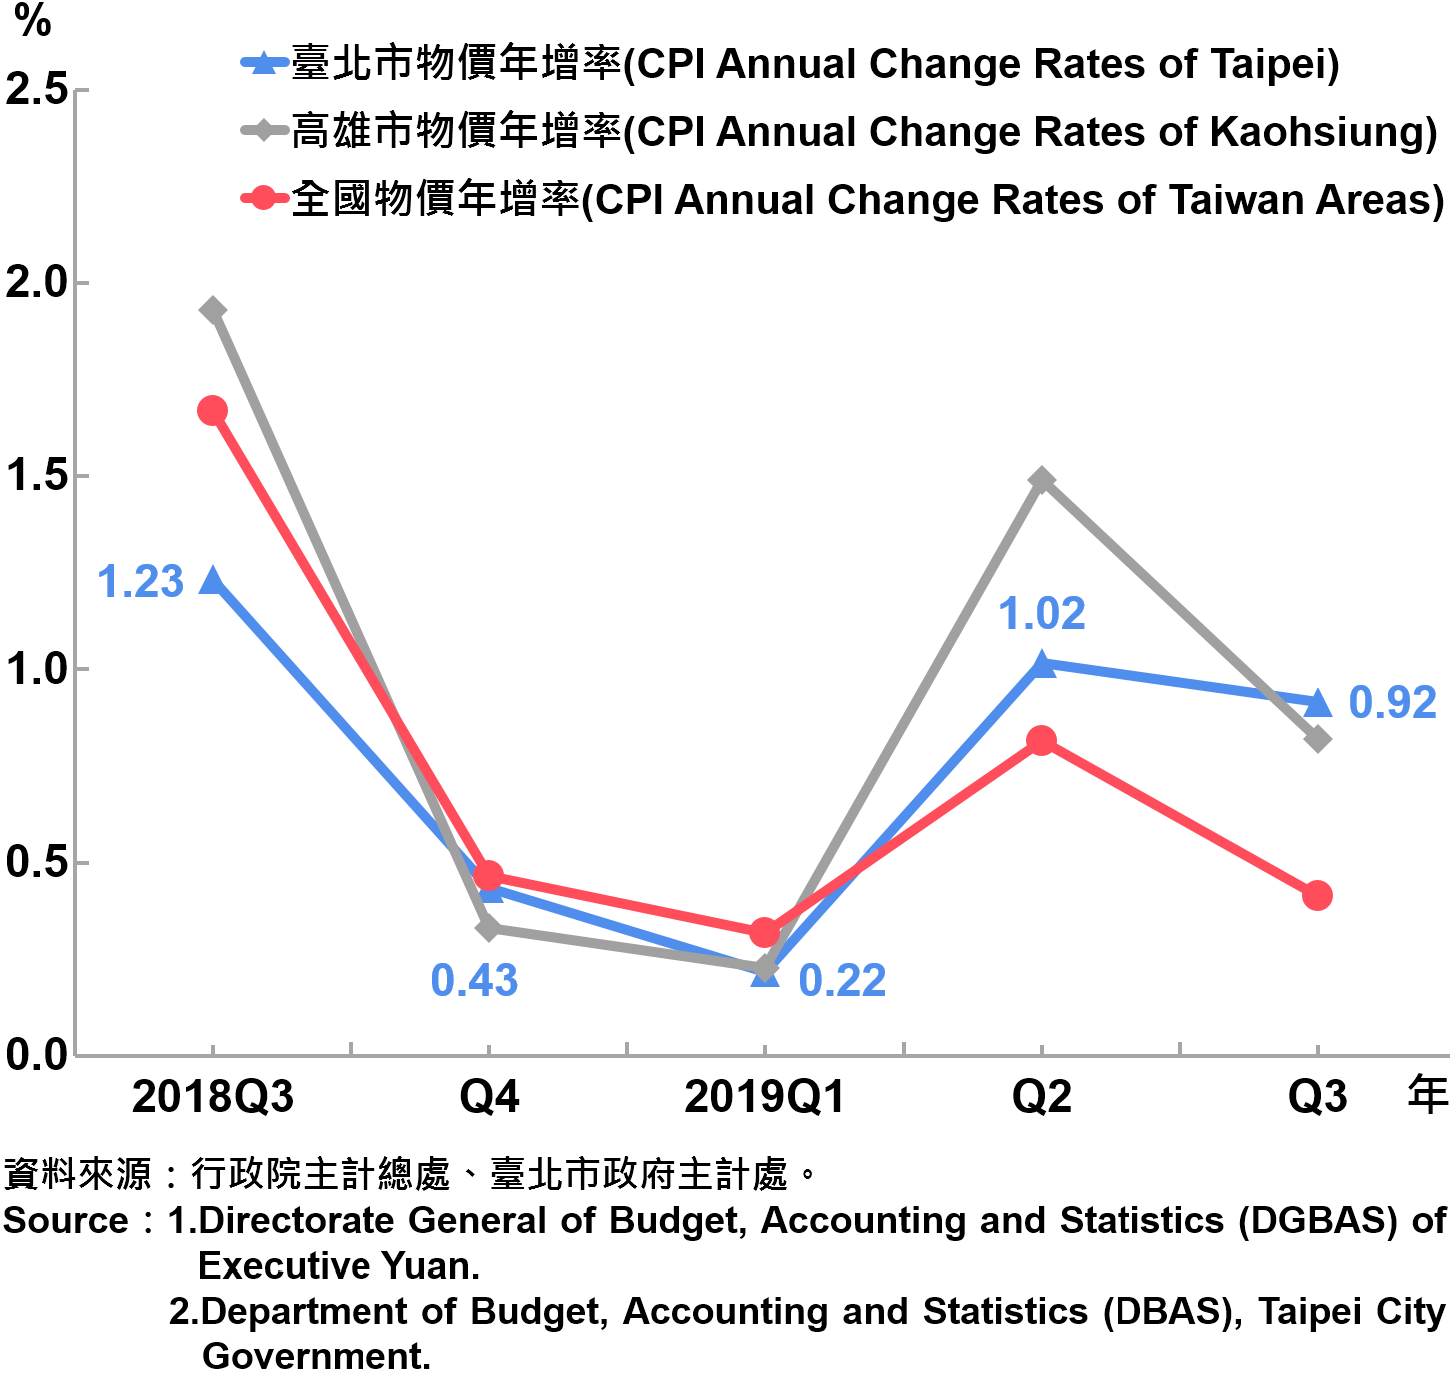 臺北市消費者物價指數（CPI）年增率—2019Q3 Annual Growth Rate of CPI in Taipei City—2019Q3